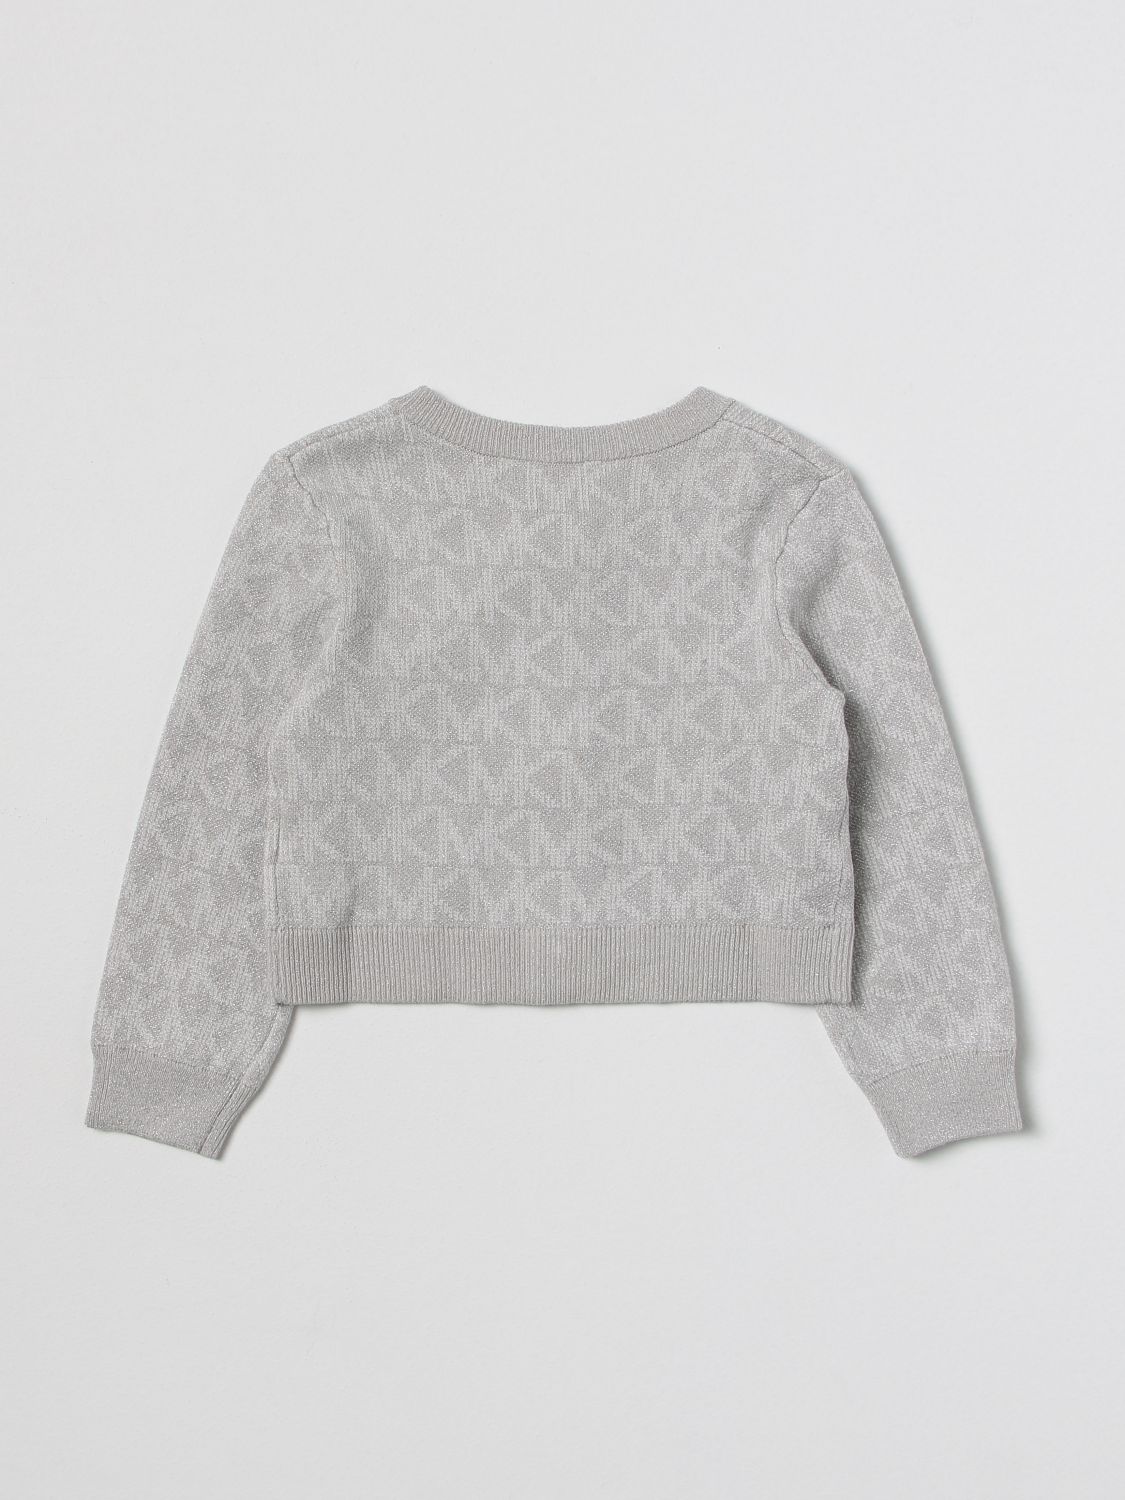 MICHAEL KORS: sweater for girls - Grey | Michael Kors sweater R15180 online  on 